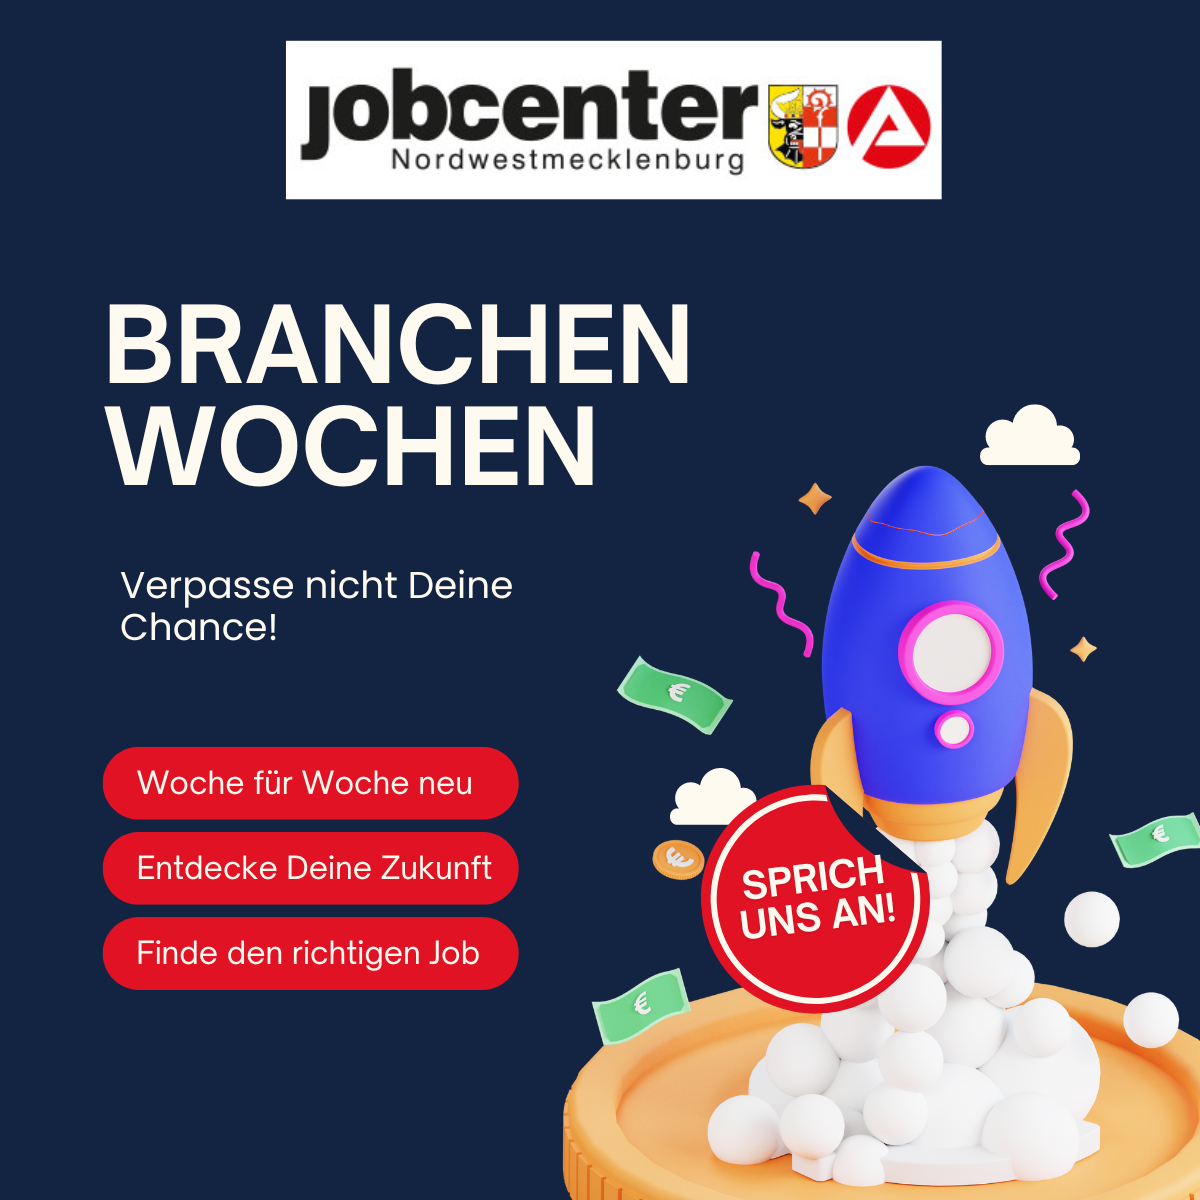 You are currently viewing Branchenwochen im Jobcenter Nordwestmecklenburg